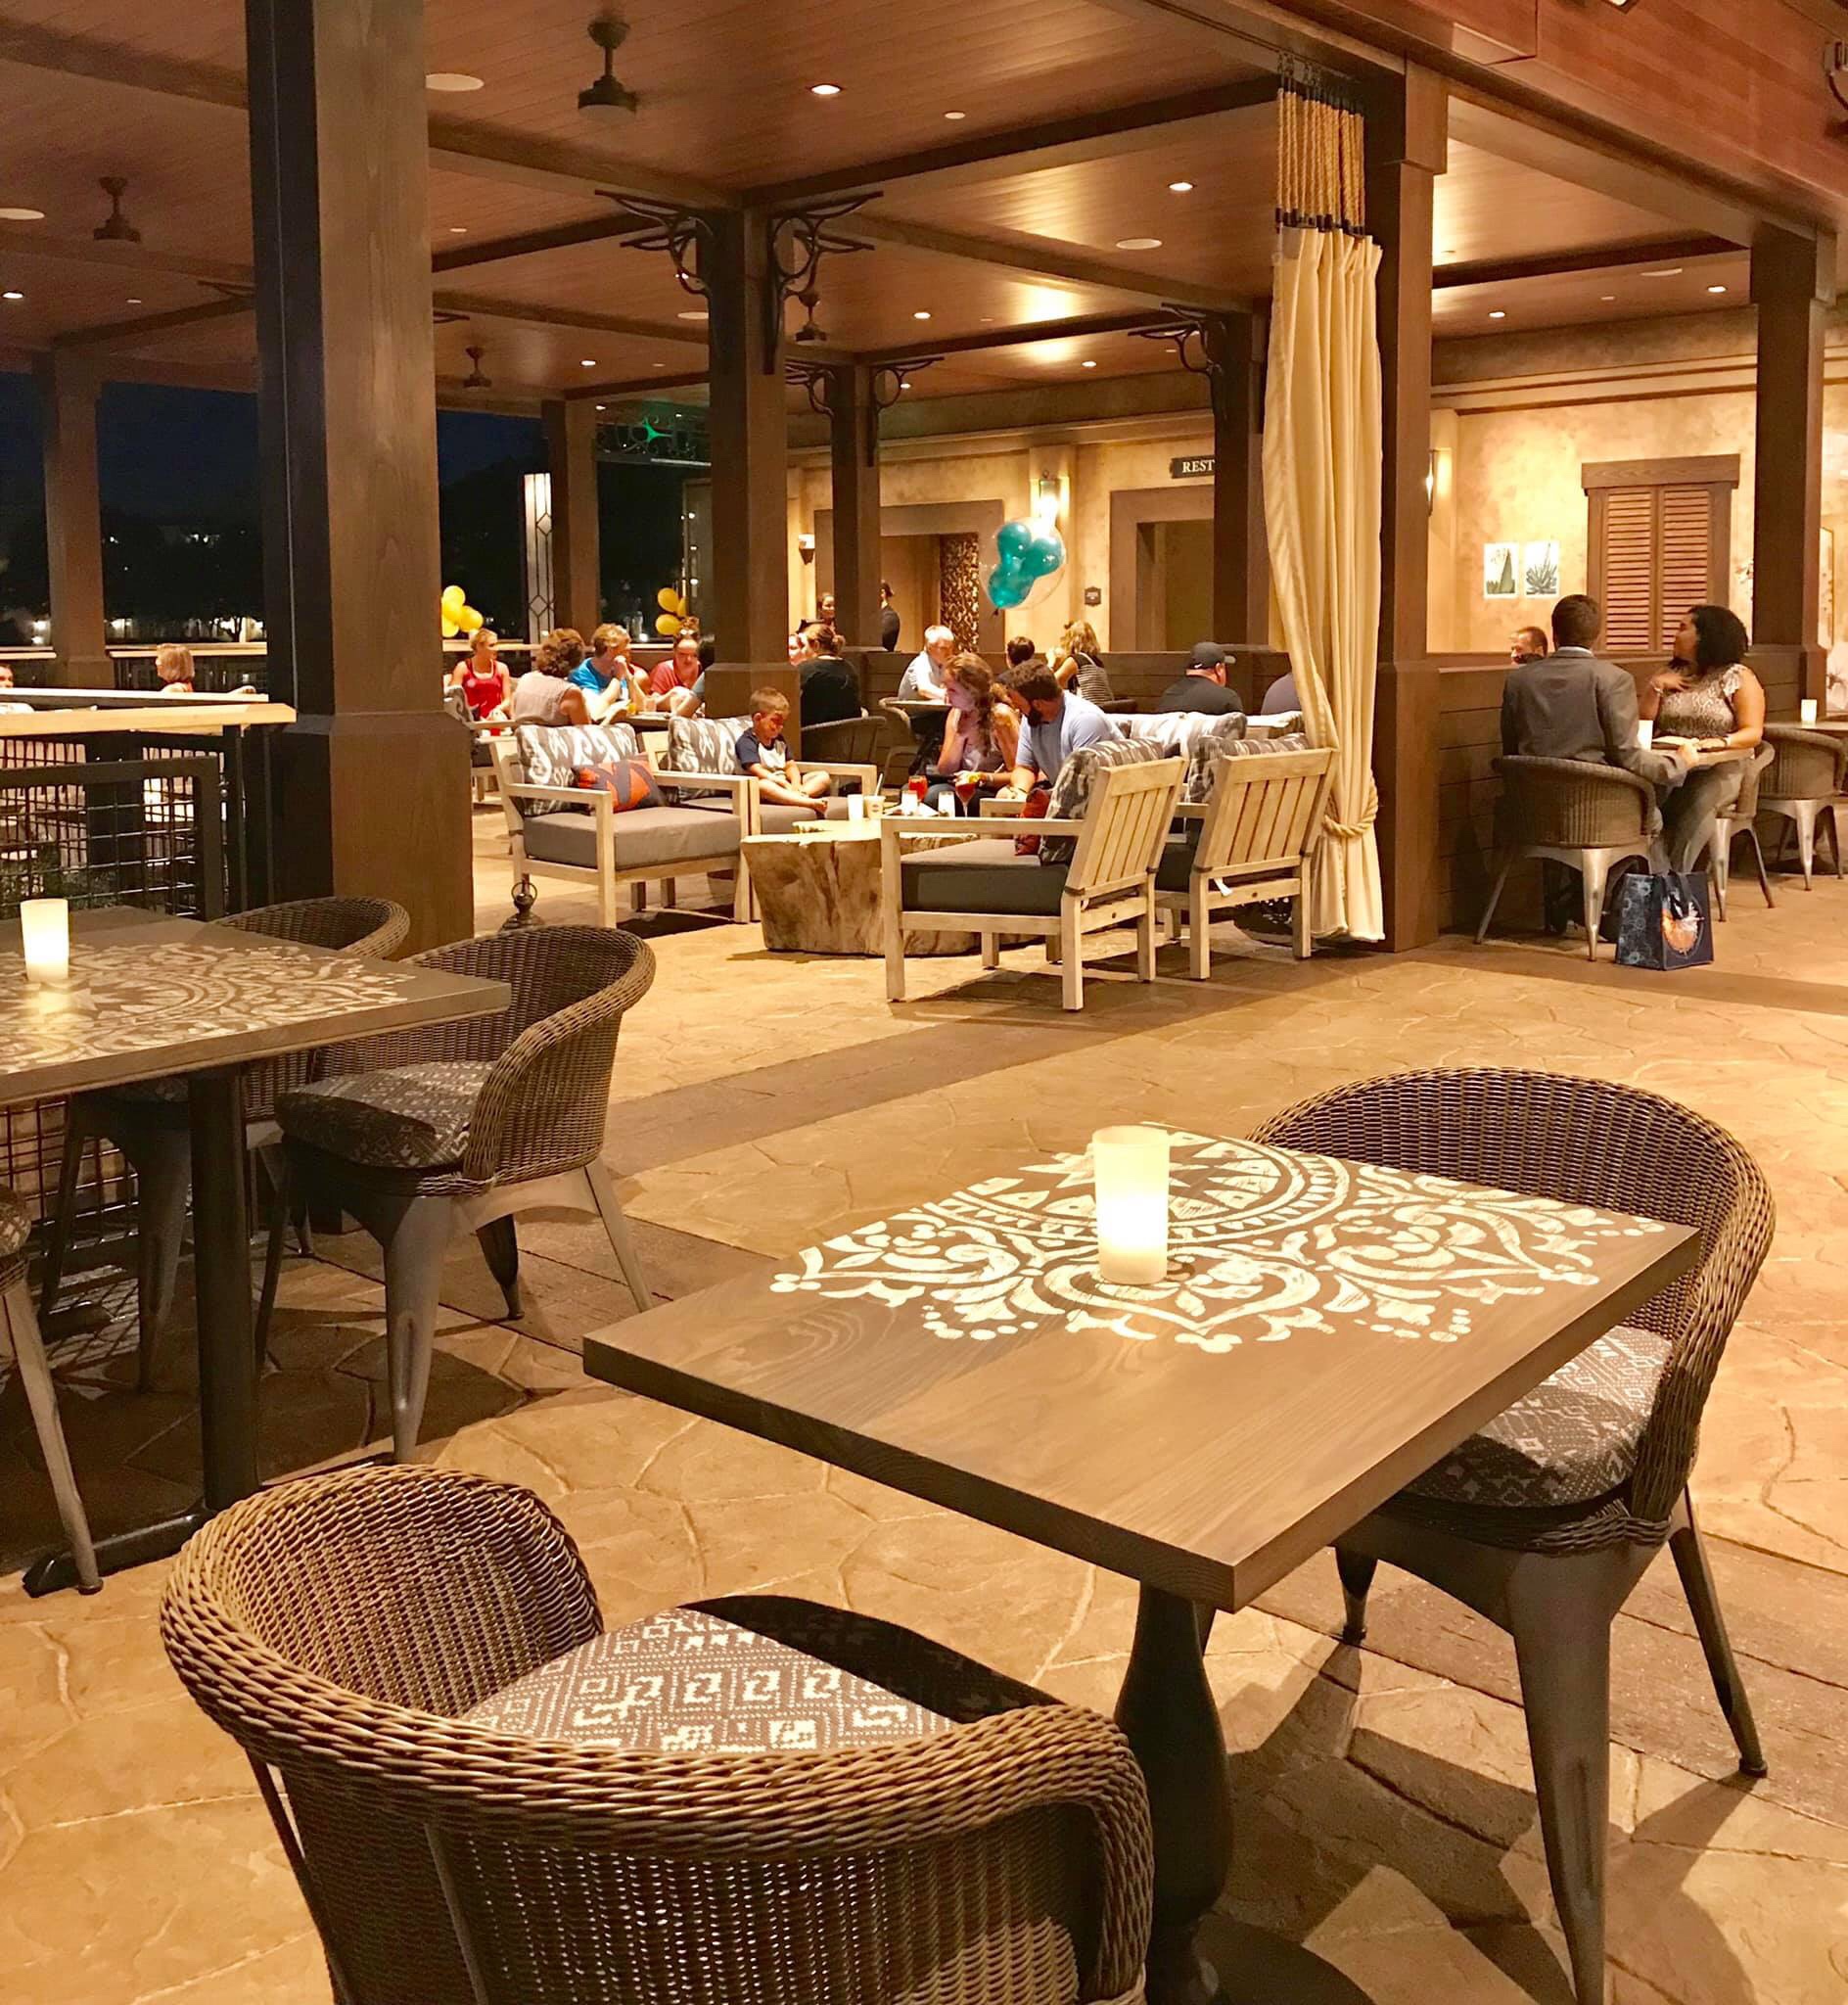 Villa Del Lago Soft Opening at Disney’s Coronado Springs Resort